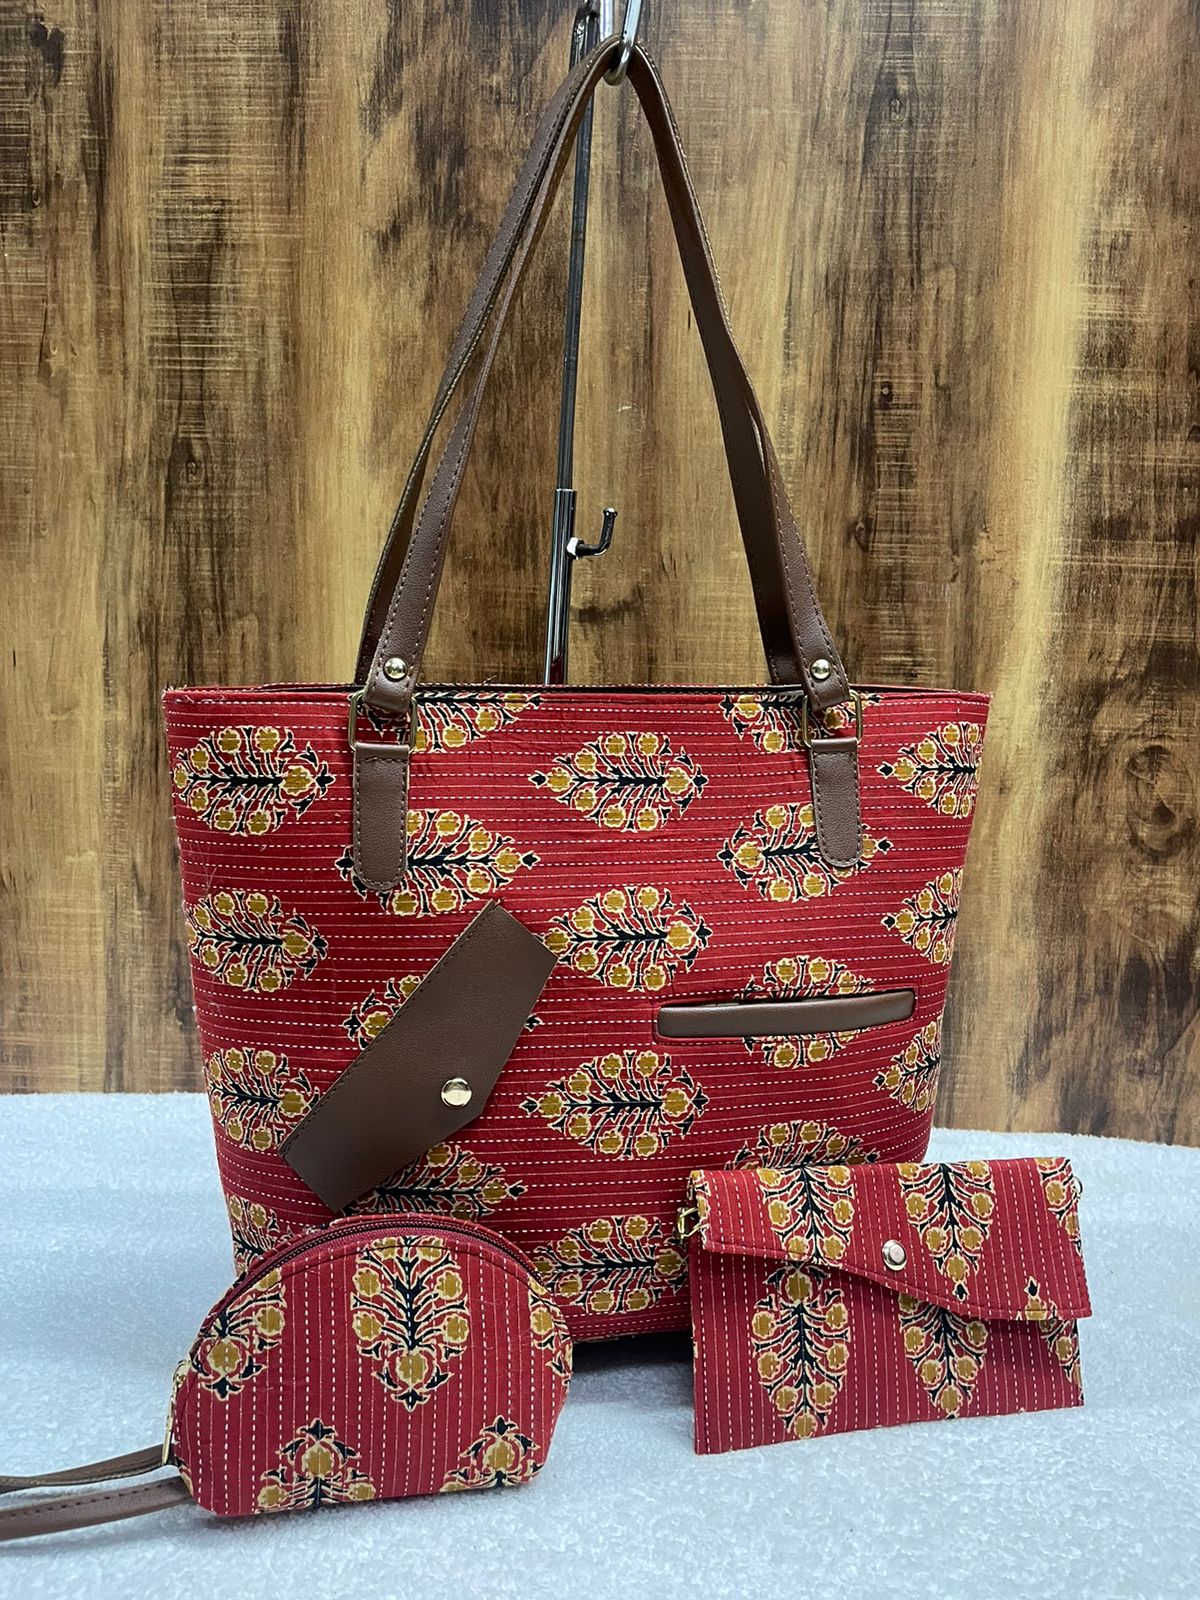 The Sol Handbag - Handmade Women's Leather Handbag and Purse